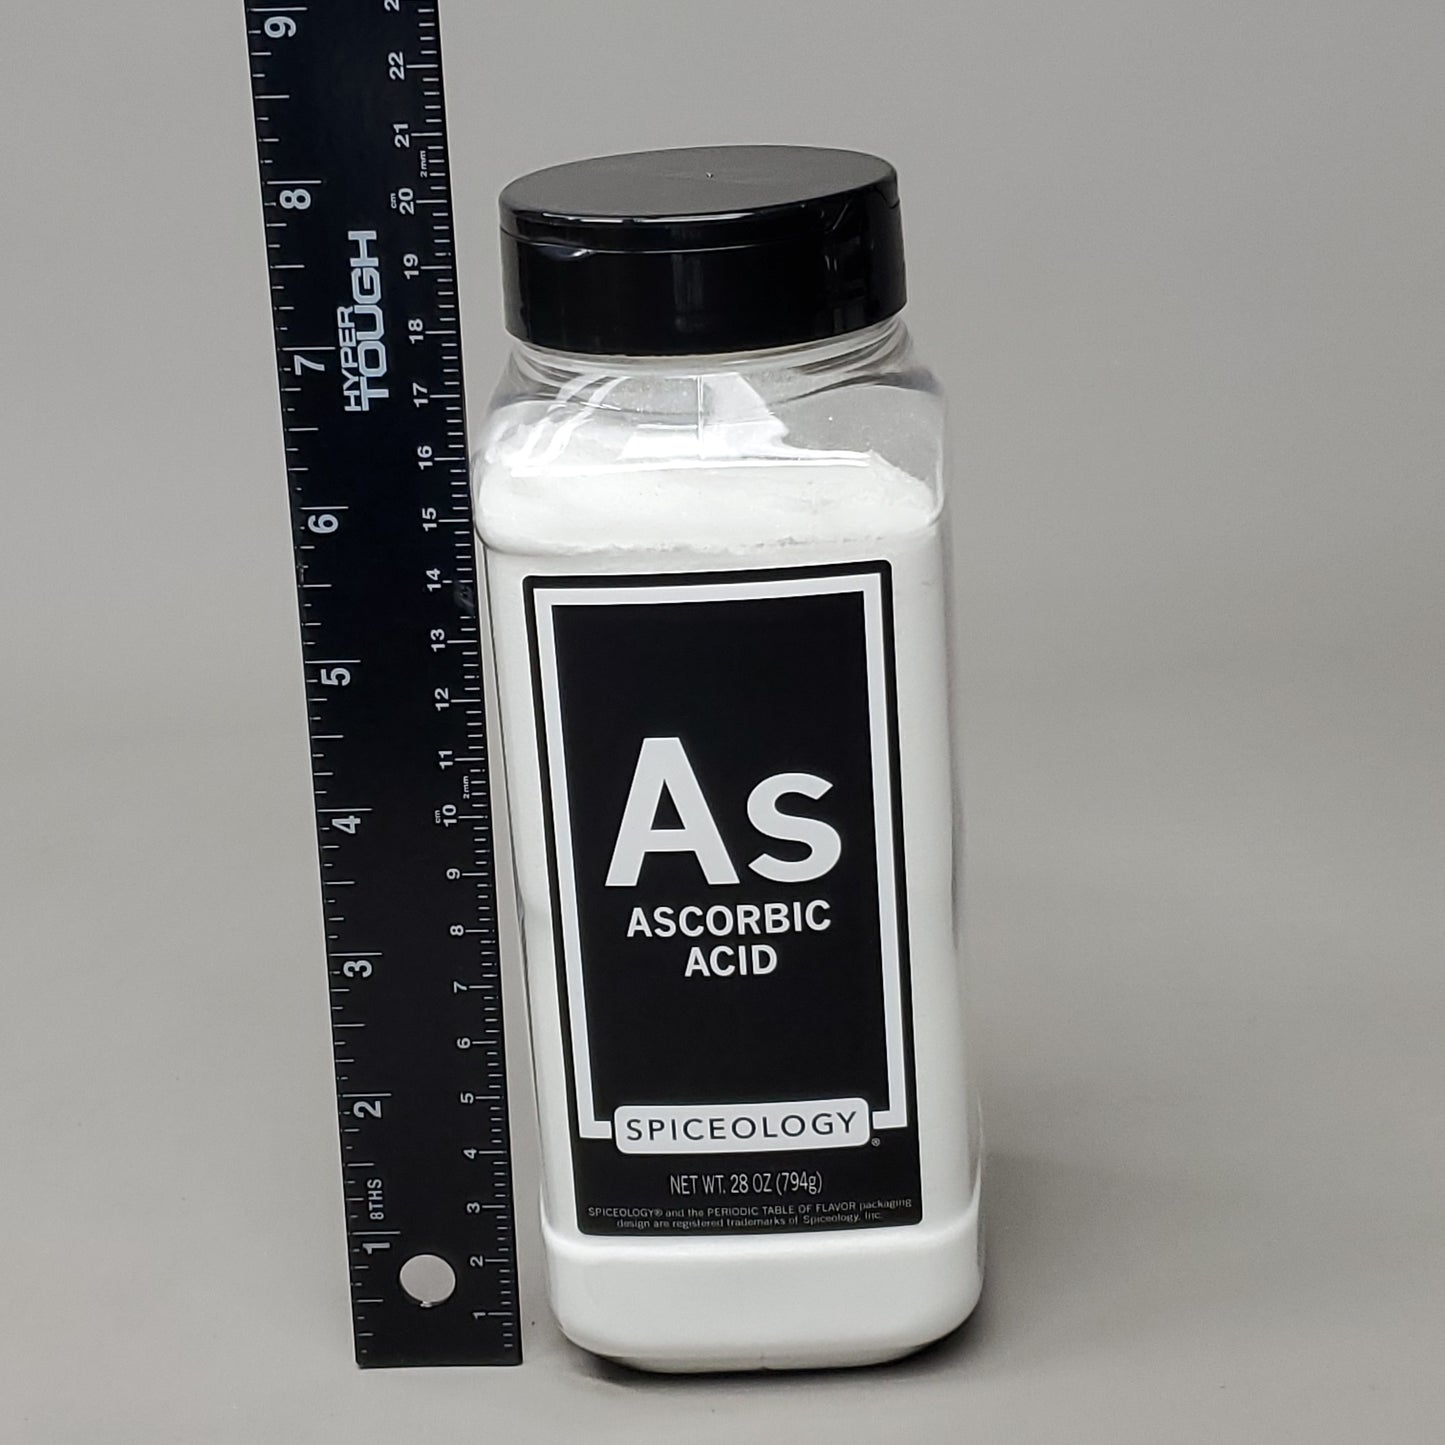 SPICEOLOGY Ascorbic Acid Powder Vitamin C Large 28 oz Exp 04/25 (New)